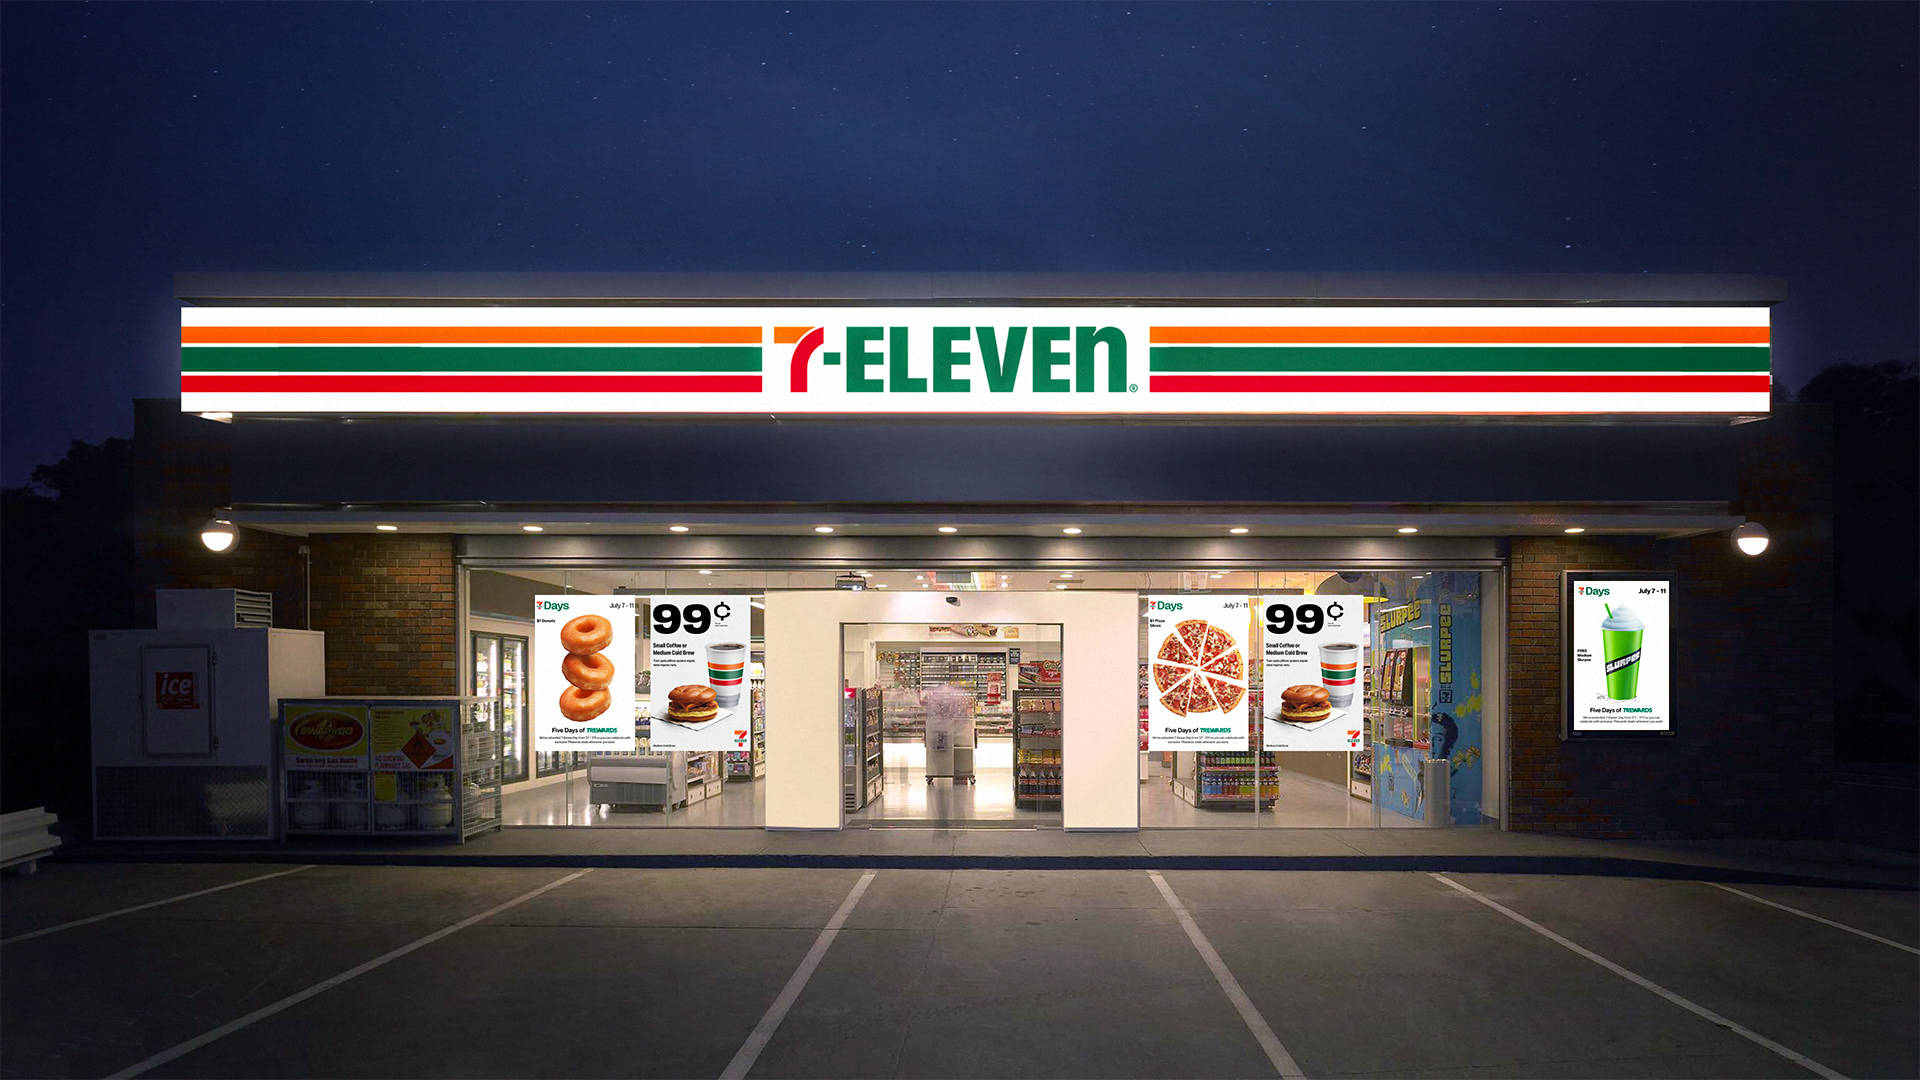 7 Eleven Franchise Store Background